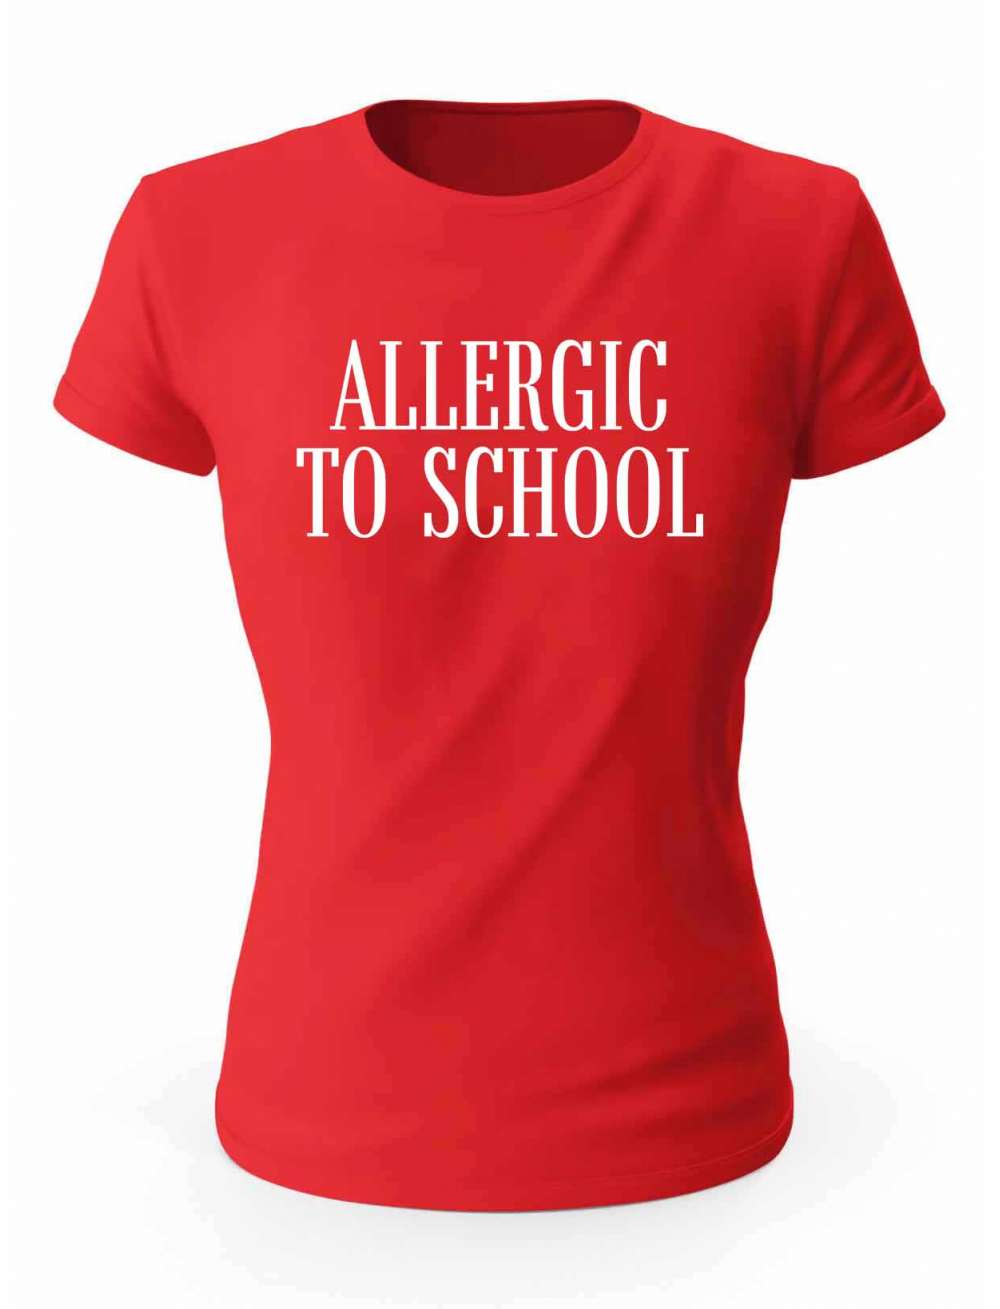 Koszulka Allergic To School, T-shirt Damski, Prezent